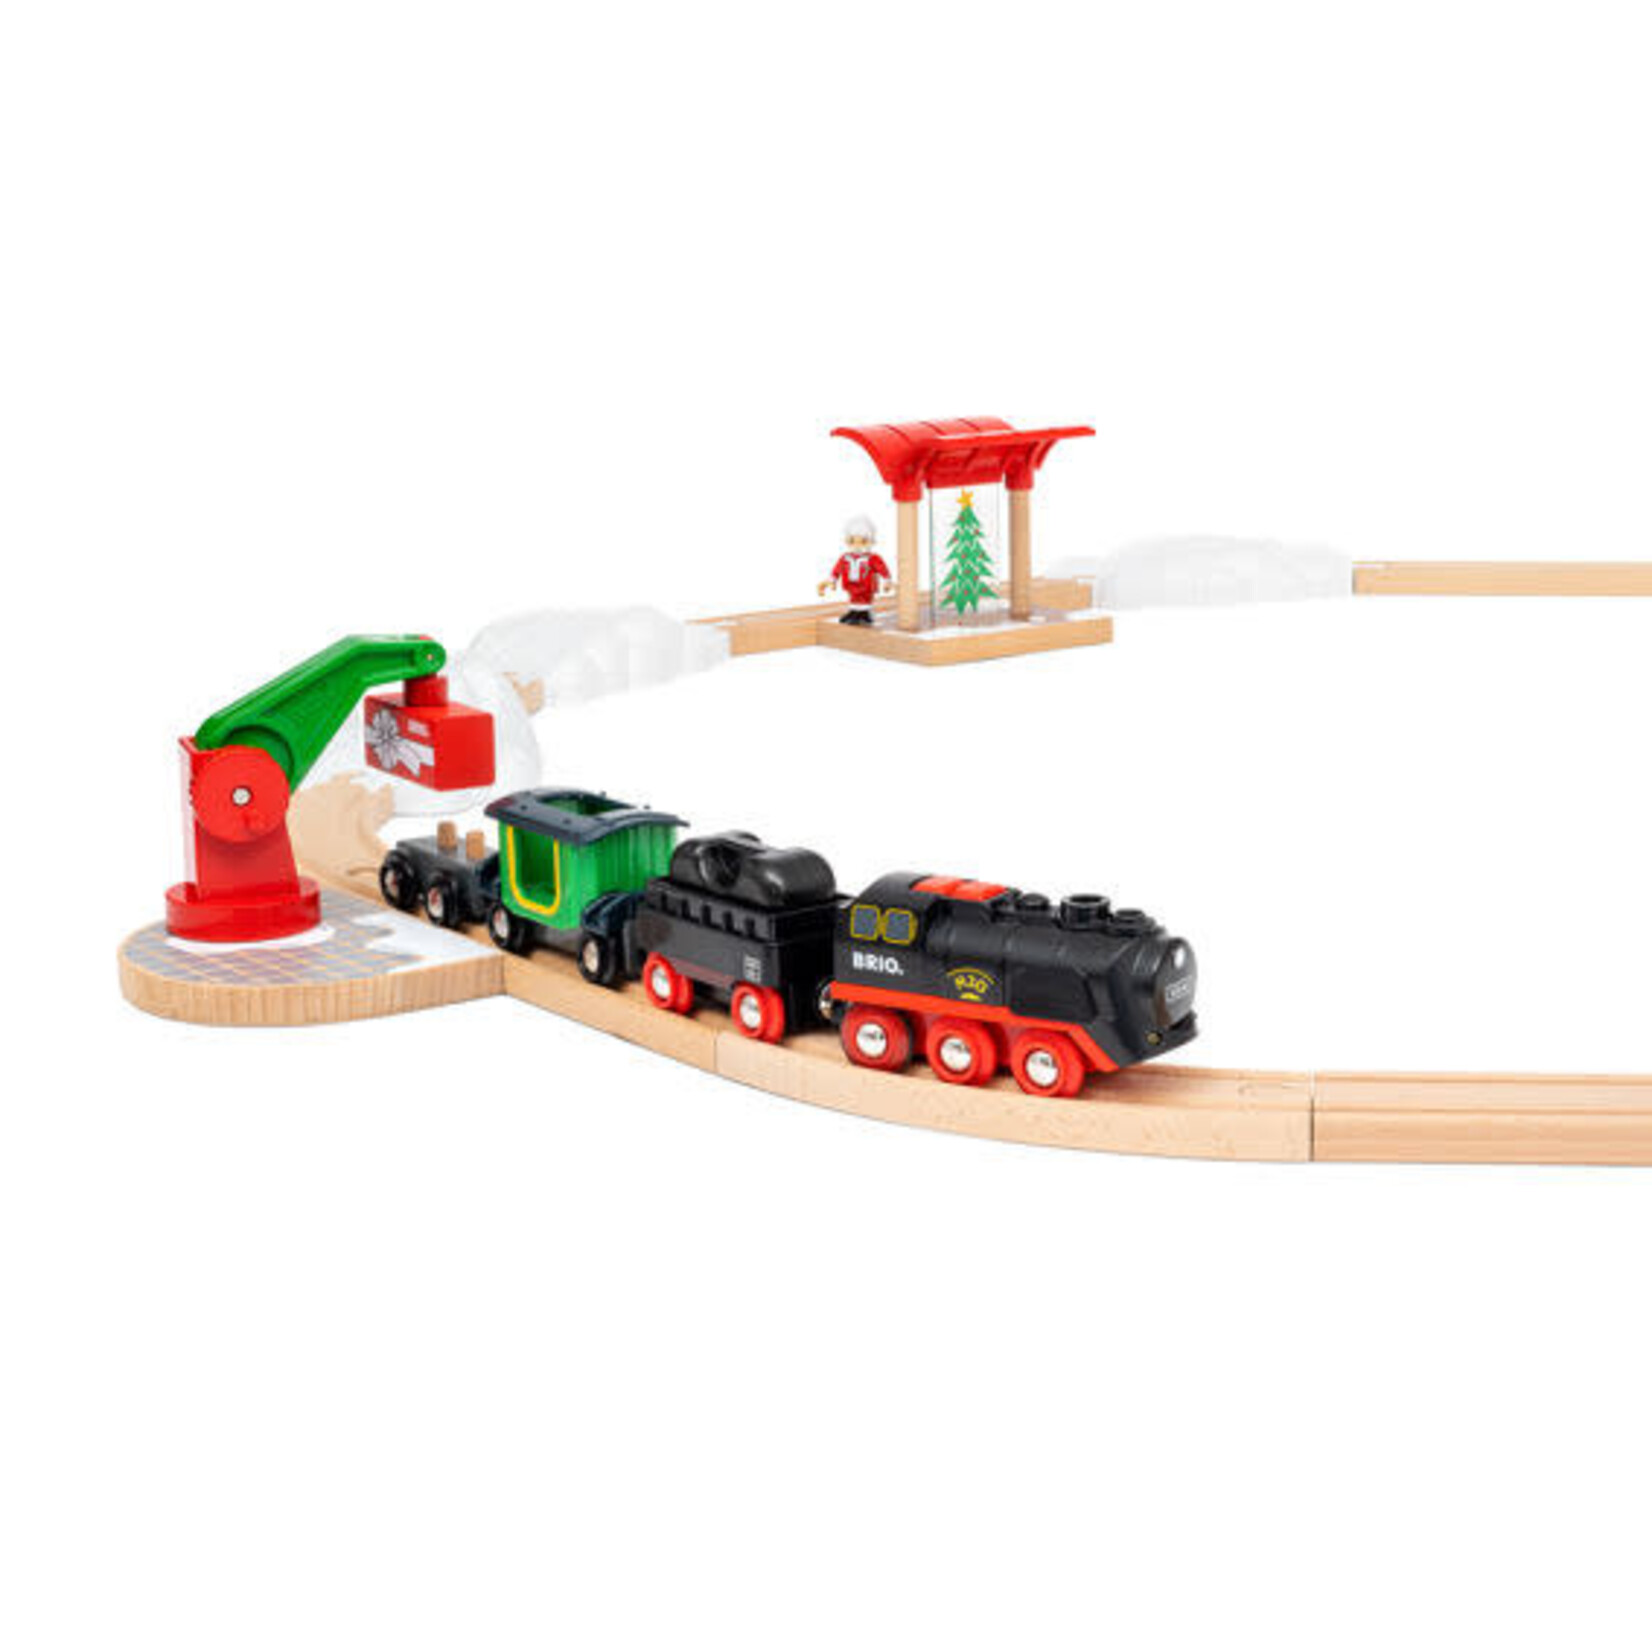 Brio Christmas Steam Train - Toy Joy